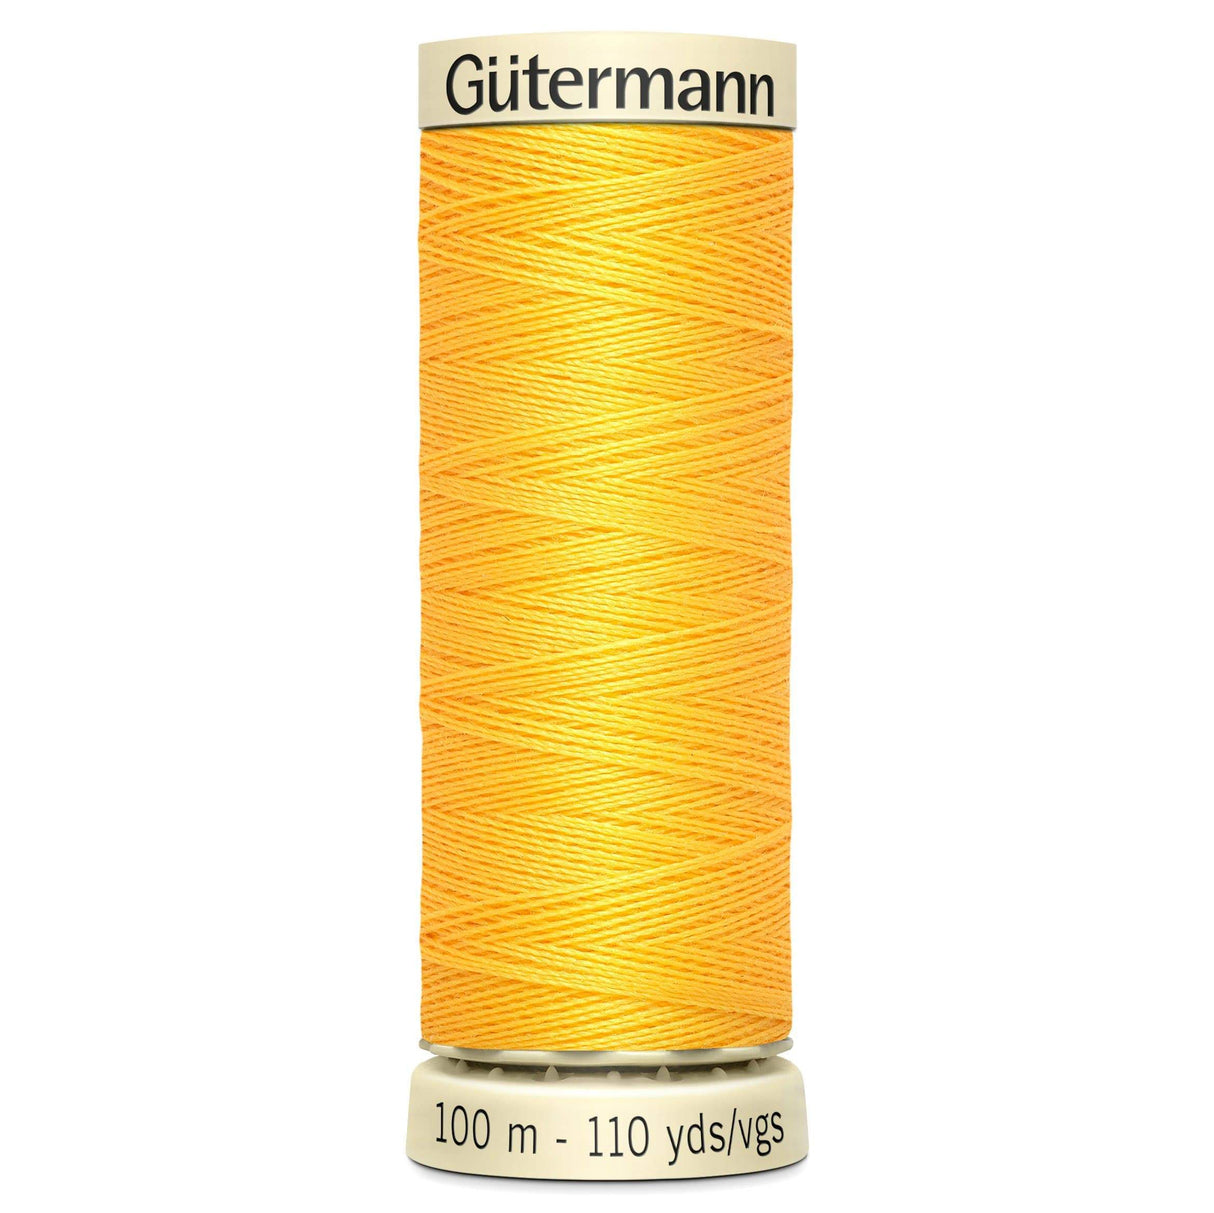 Groves Haberdashery 417 Gutermann Thread Sewing Cotton 100 m Black to Pink